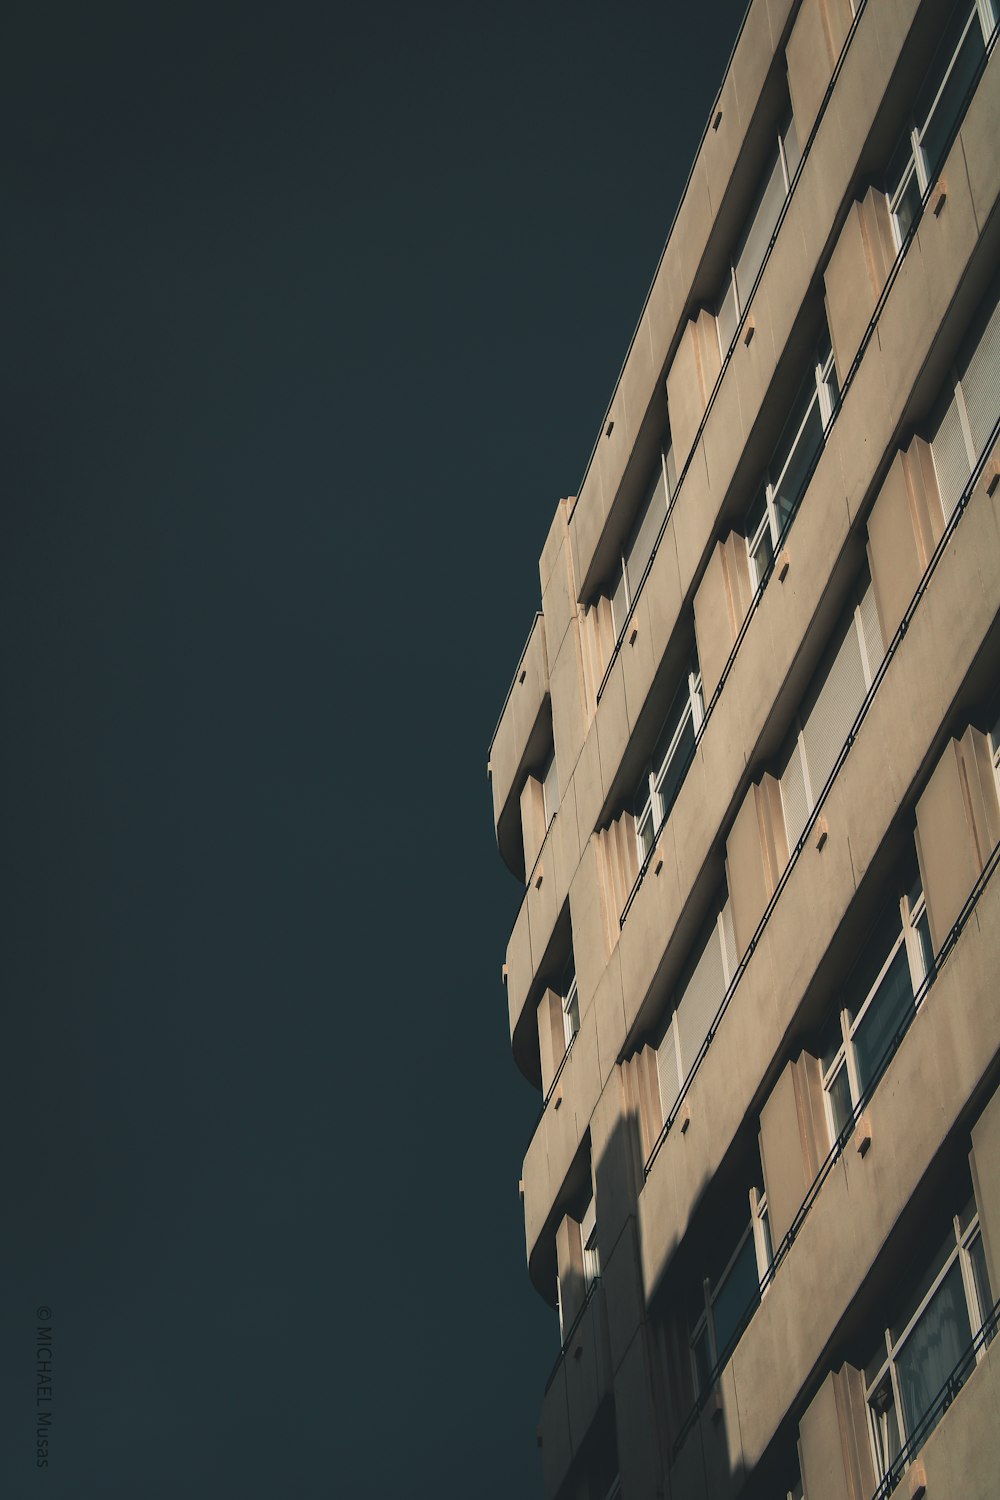 a tall building with balconies against a dark sky